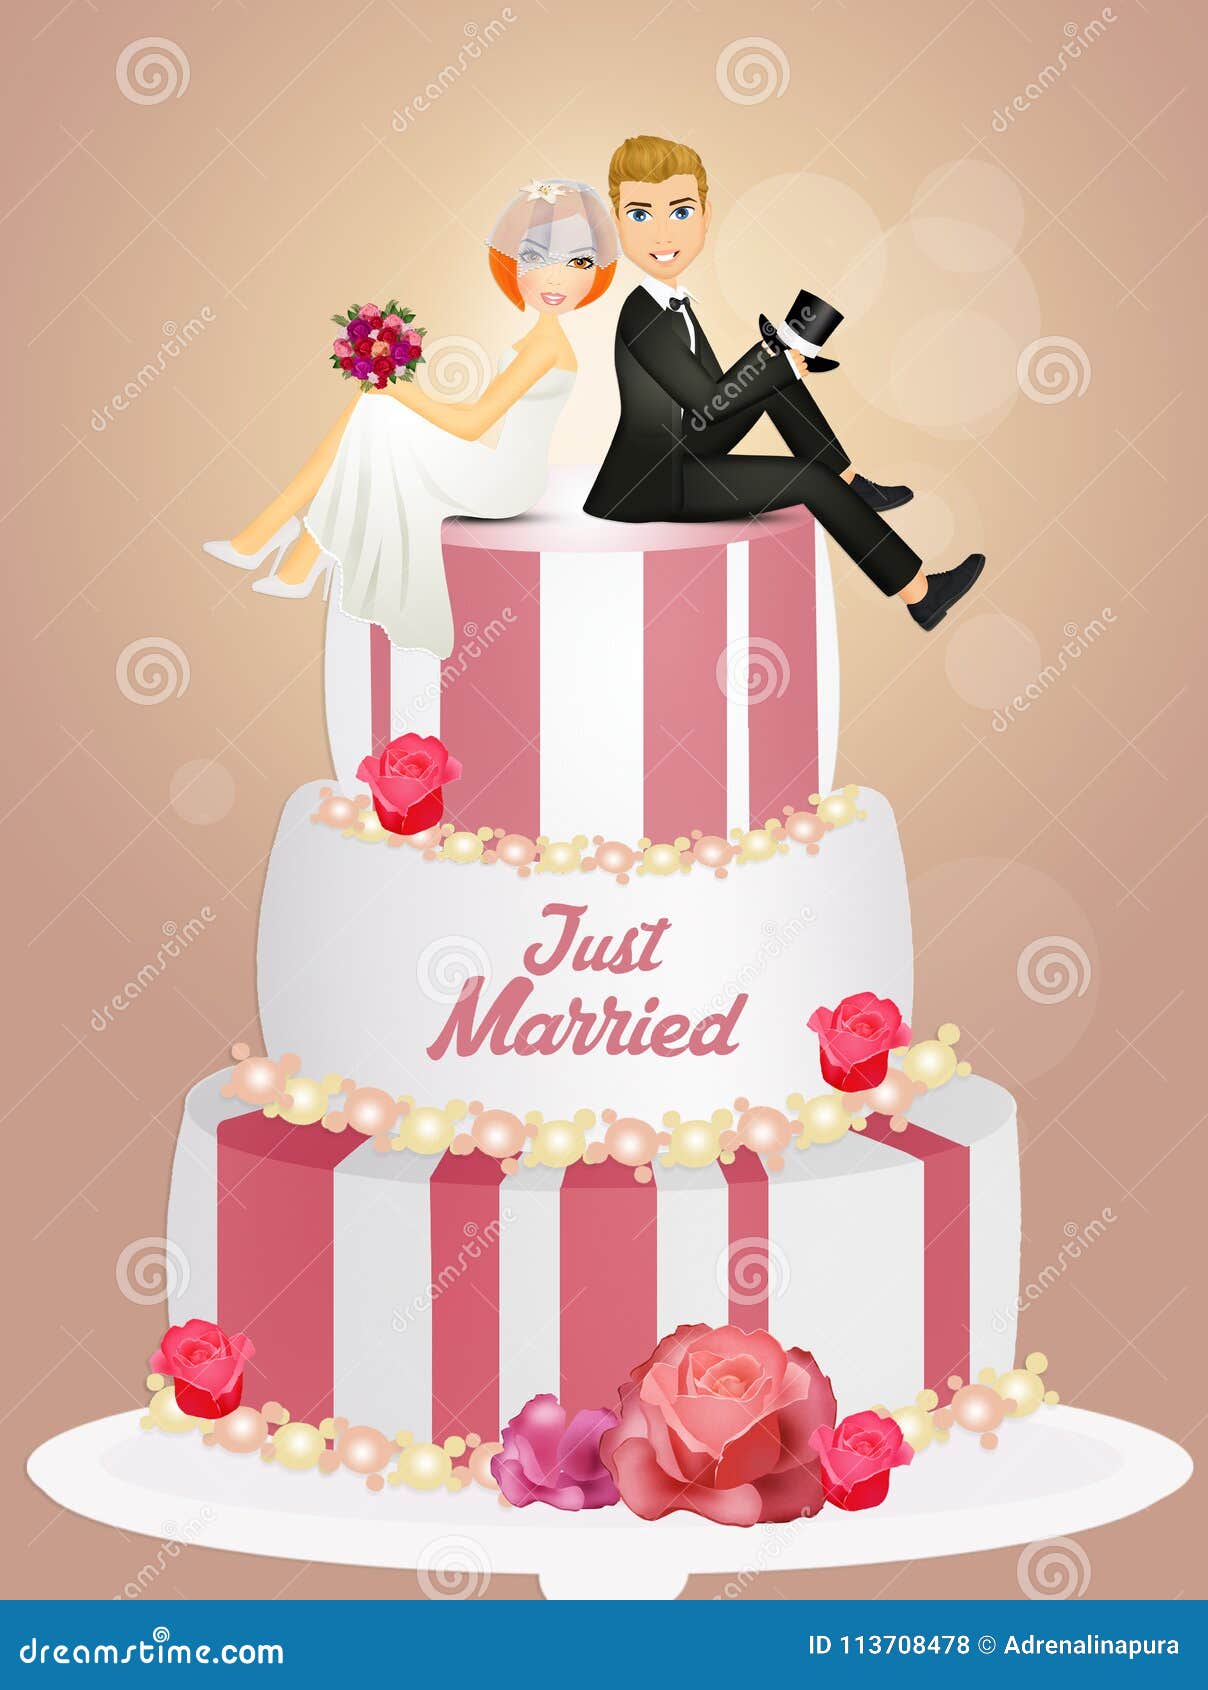 Get married on the cake stock illustration. Illustration of groom ...